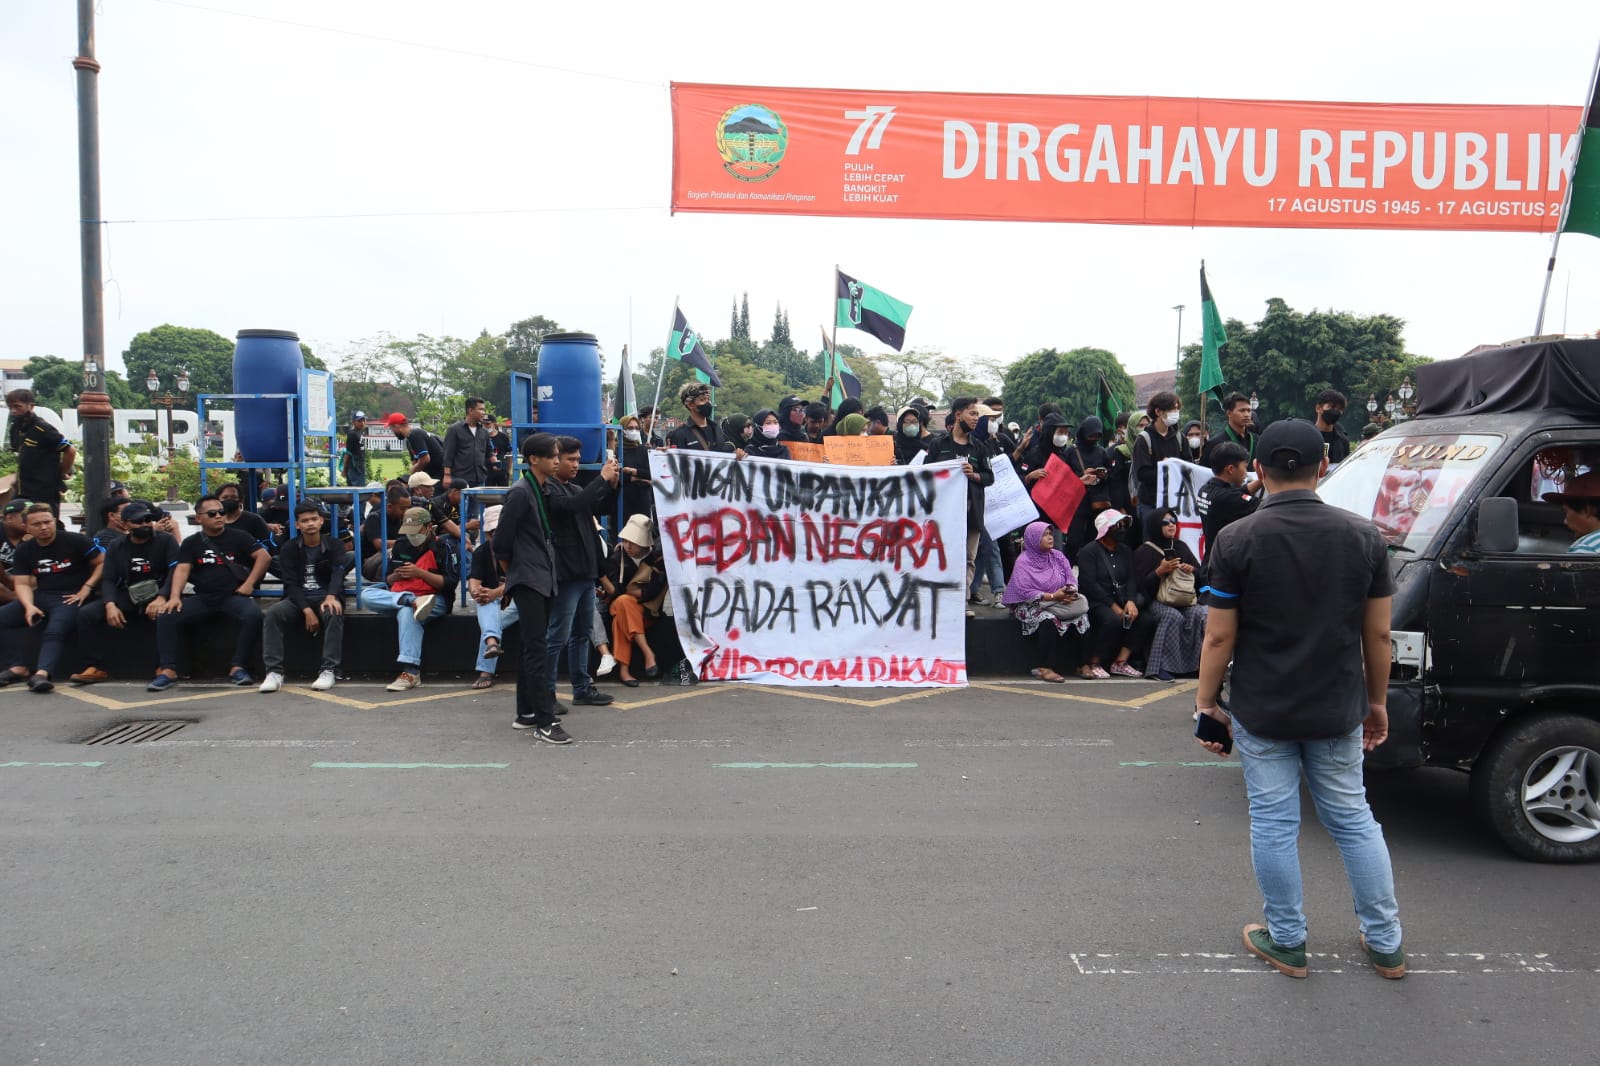 Ini Foto Demo Ojek Online di Purwokerto, Spanduk Tertulis: Jangan Umpankan Beban Negara kepada Rakyat    